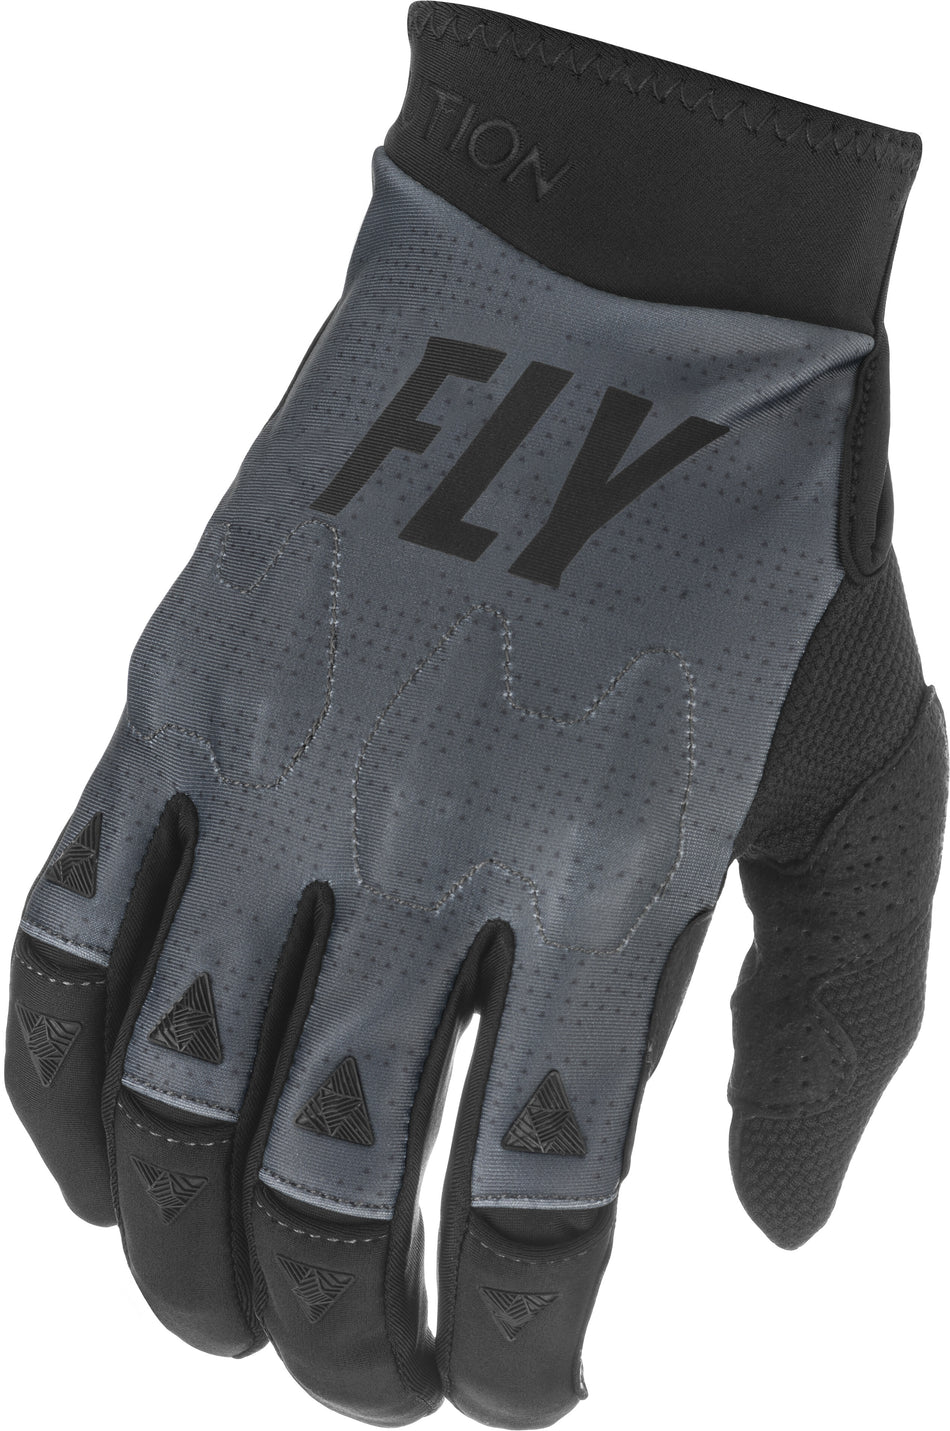 FLY RACING Evolution Dst Gloves Grey/Black/Stone Sz 11 374-11611